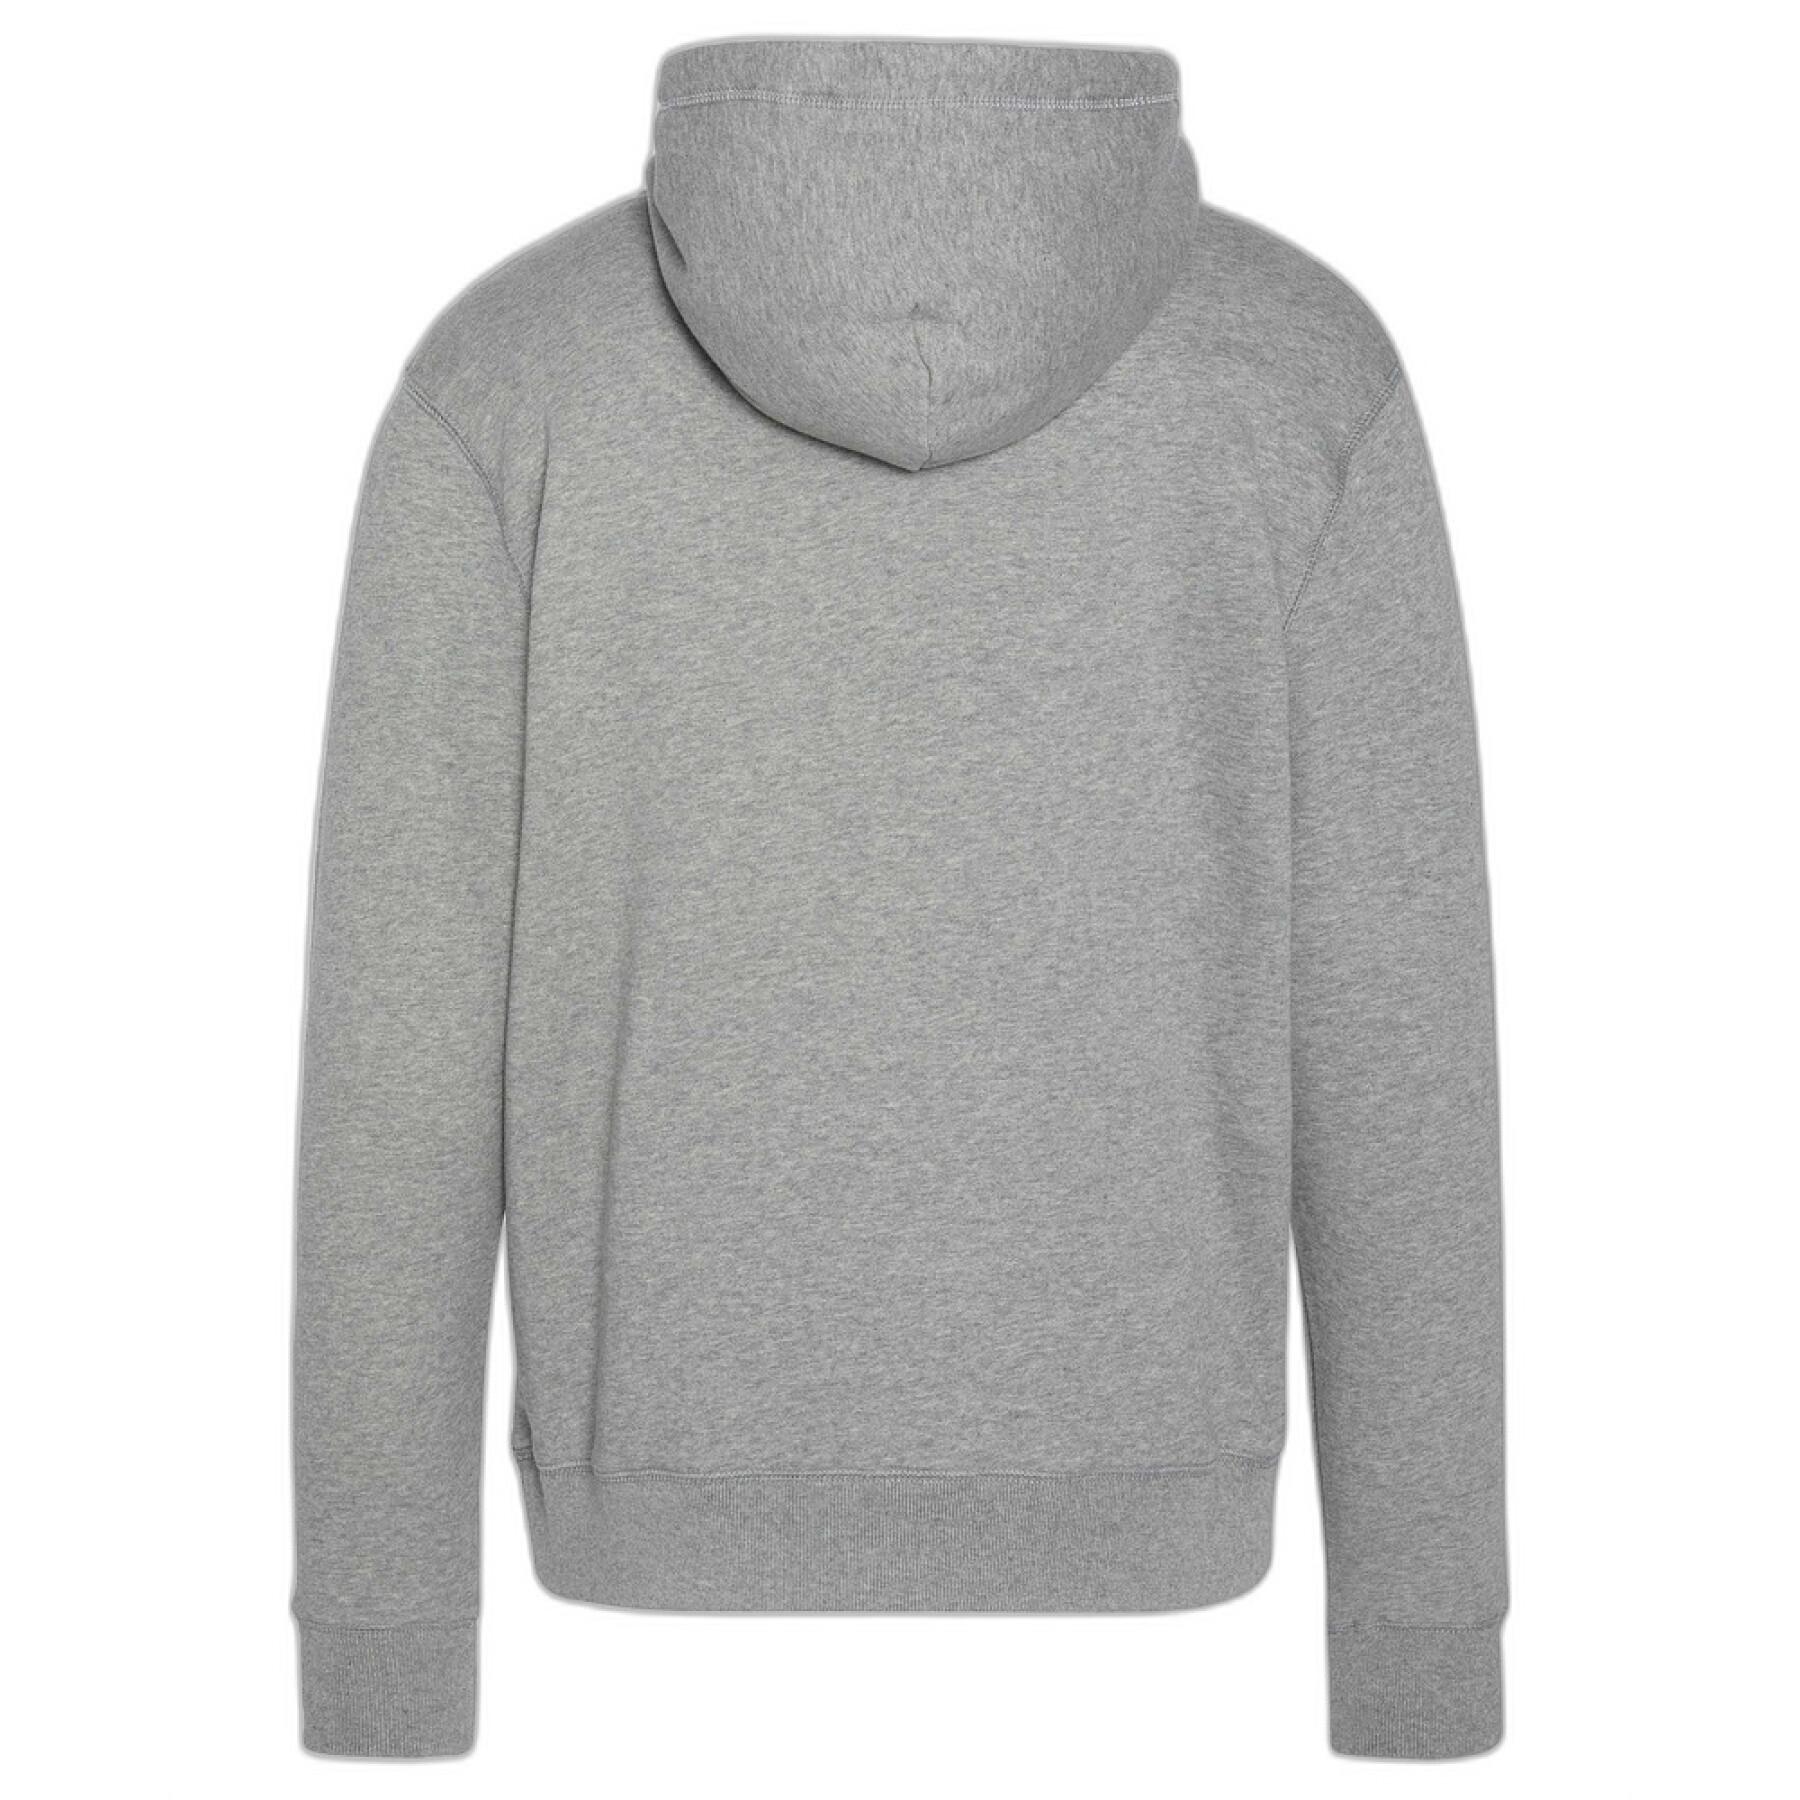 Sweatshirt capuche petit logo poitrine Schott